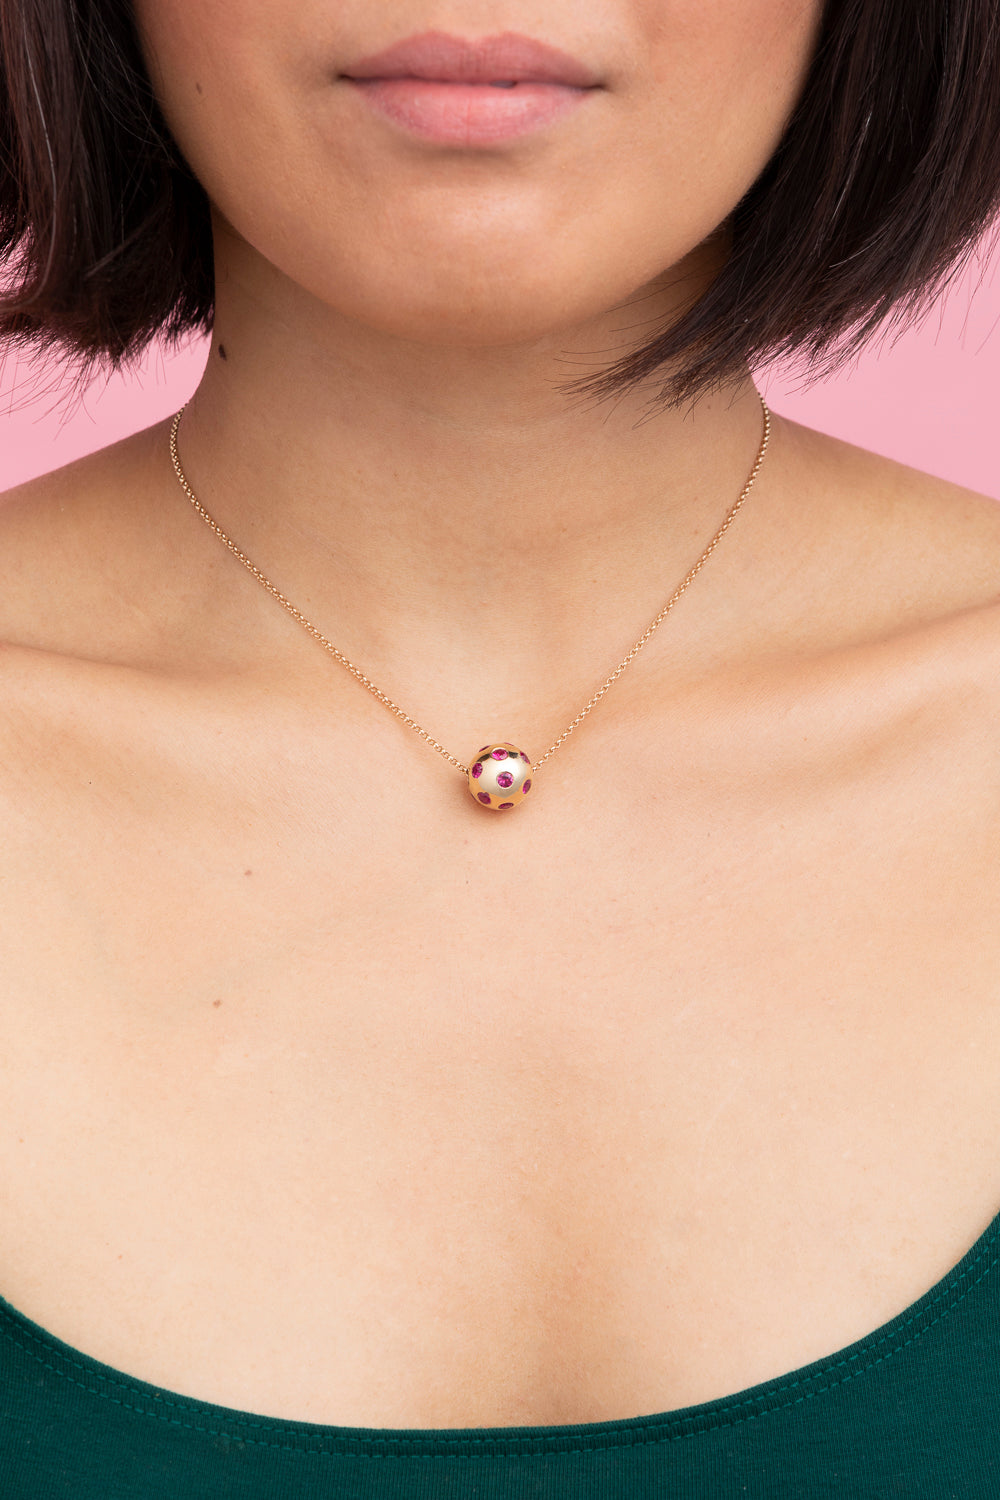 Rachel Quinn Jewelry Polka Dot Sphere Necklace magenta sapphires set all around on gold chain on female model neck